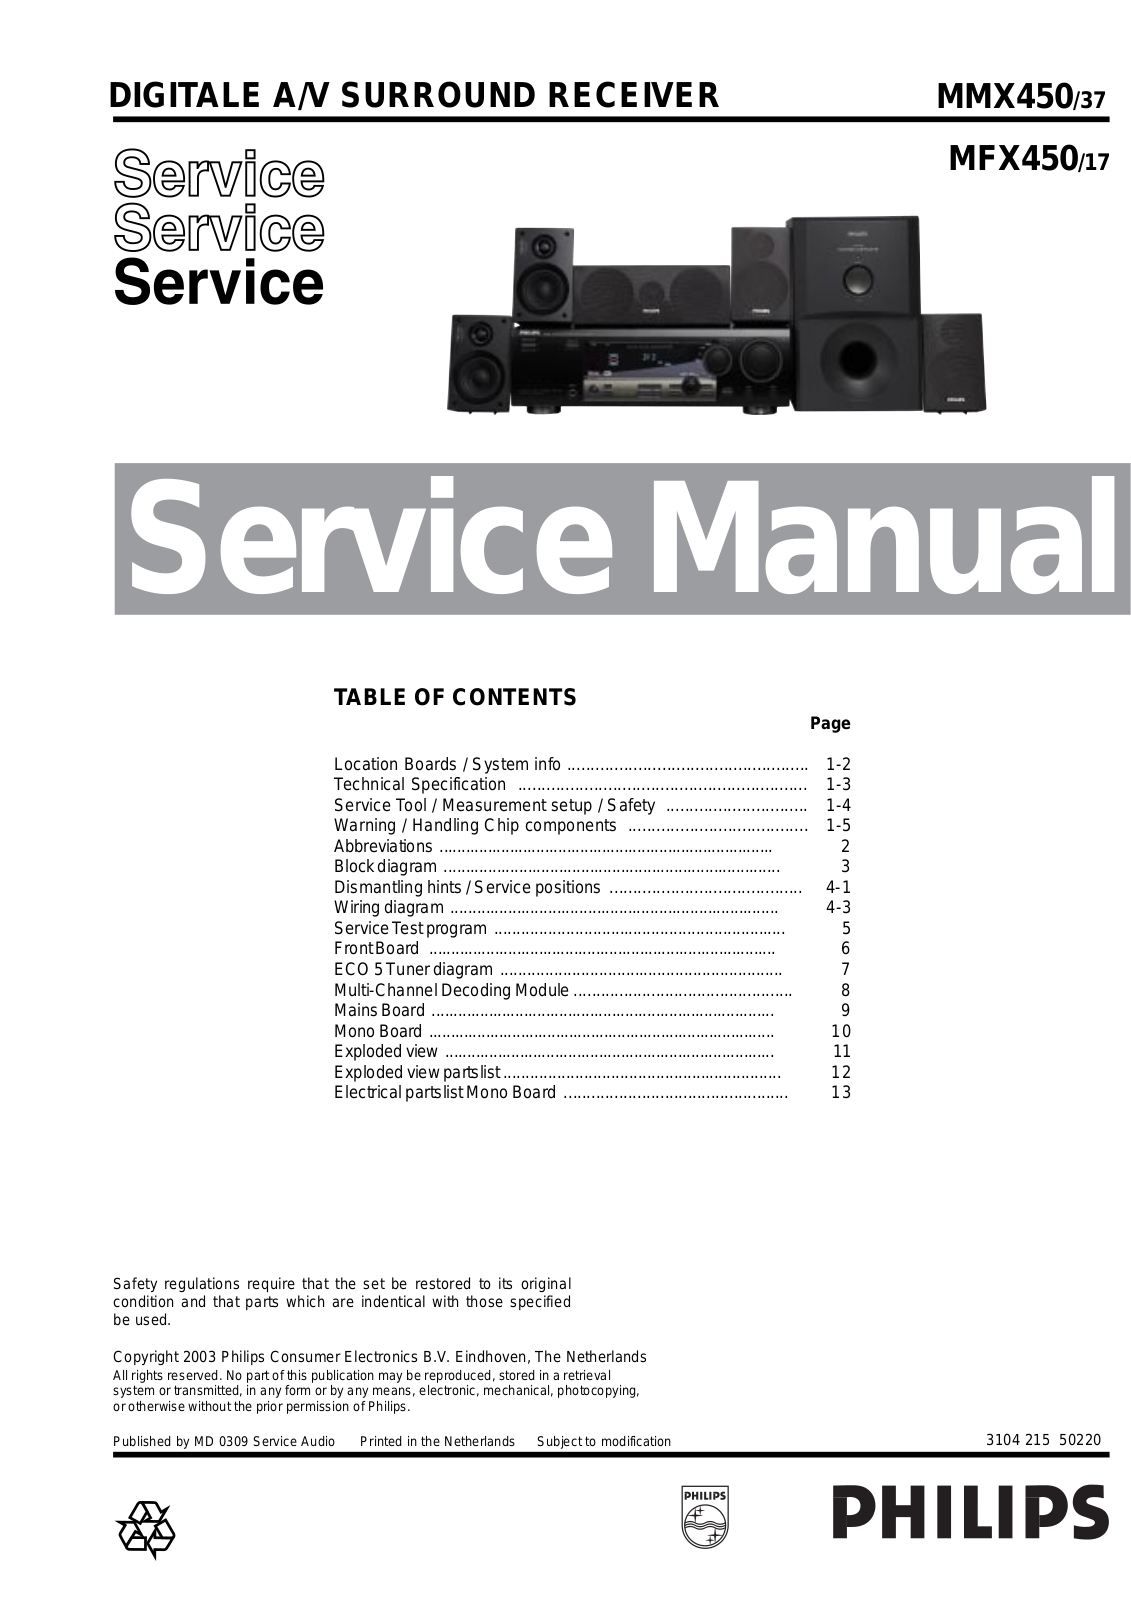 Philips MMX-450, MFX-450 Service Manual